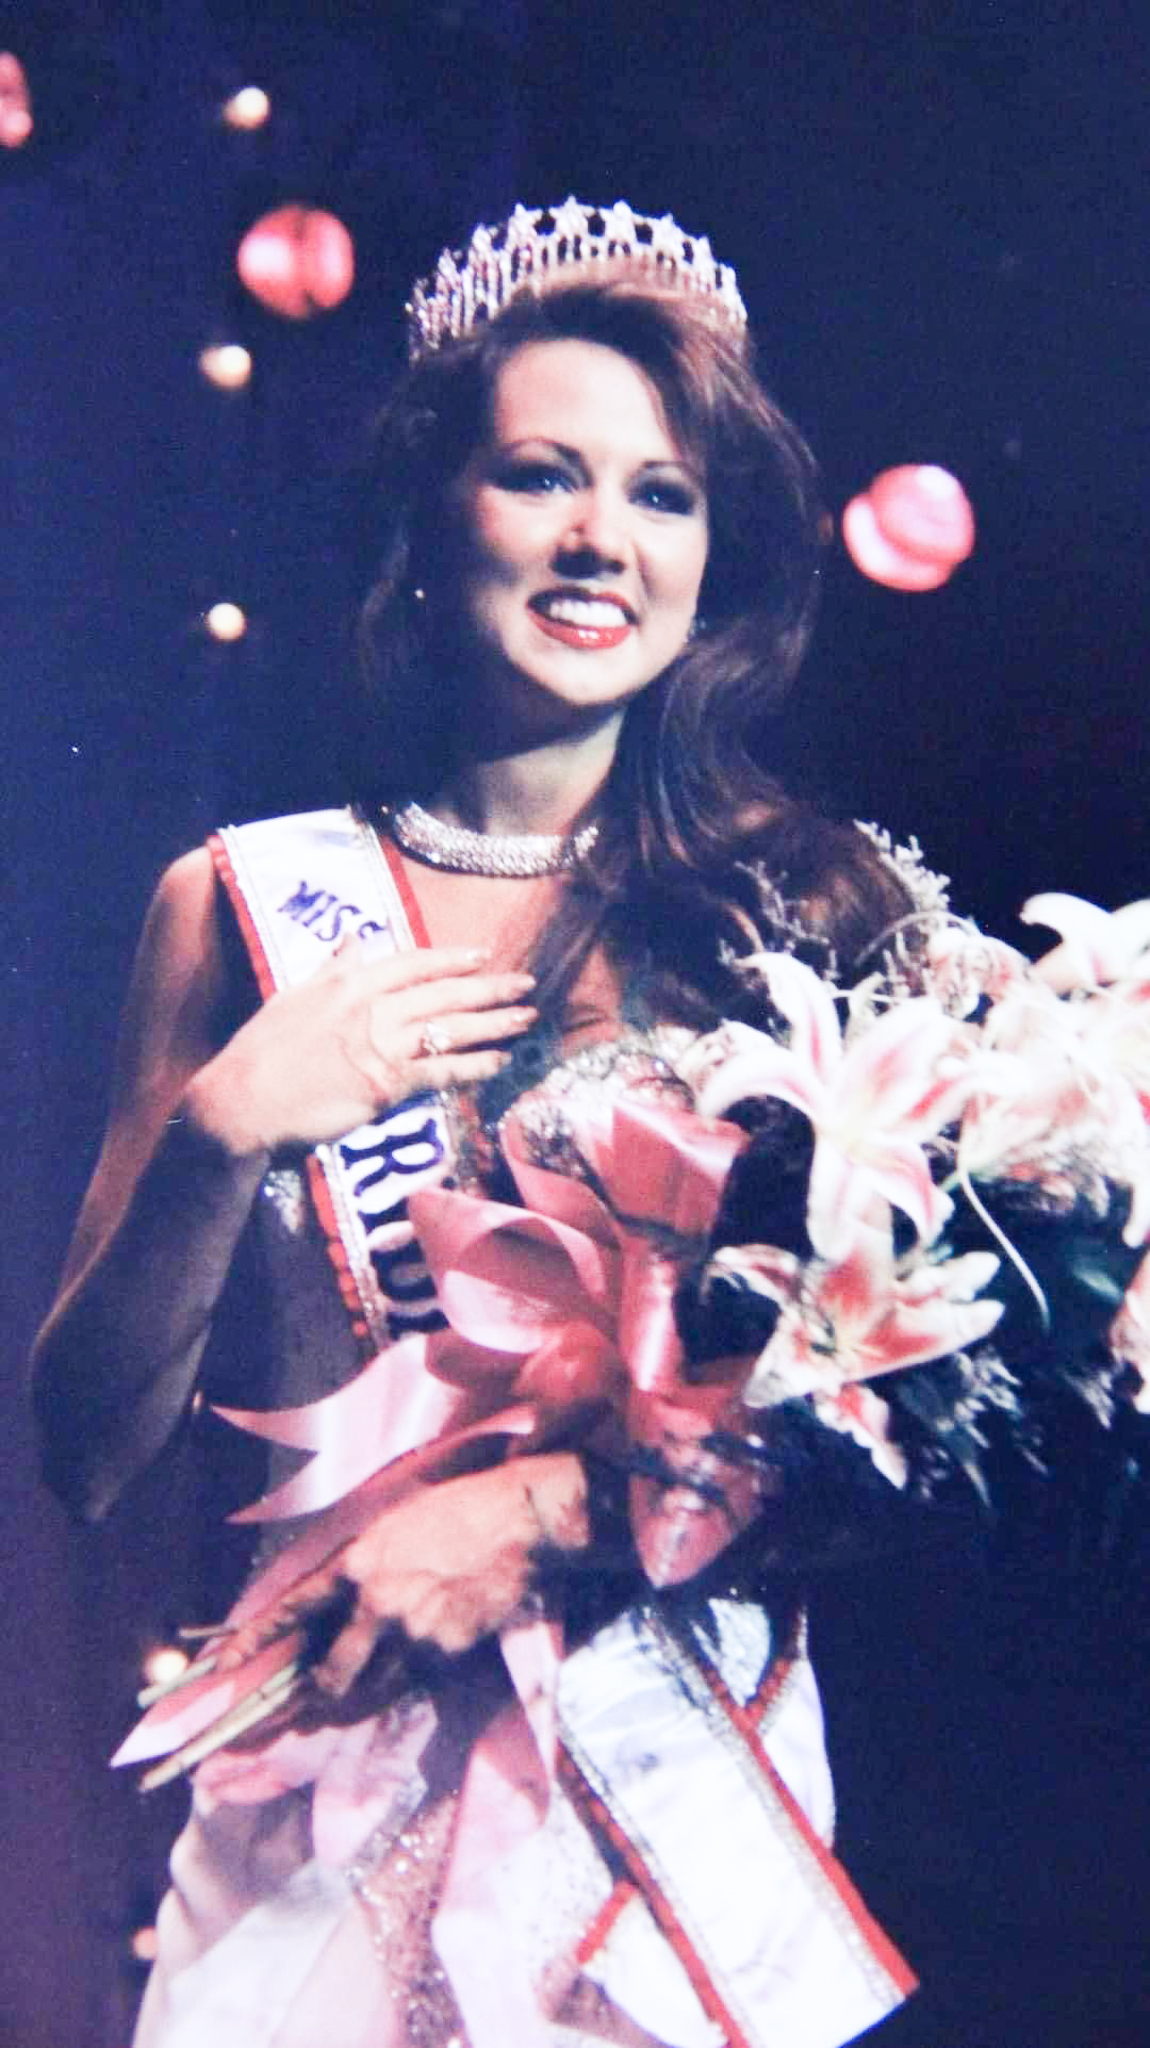 Kristin Ludecke is crowned Miss Florida USA 2000